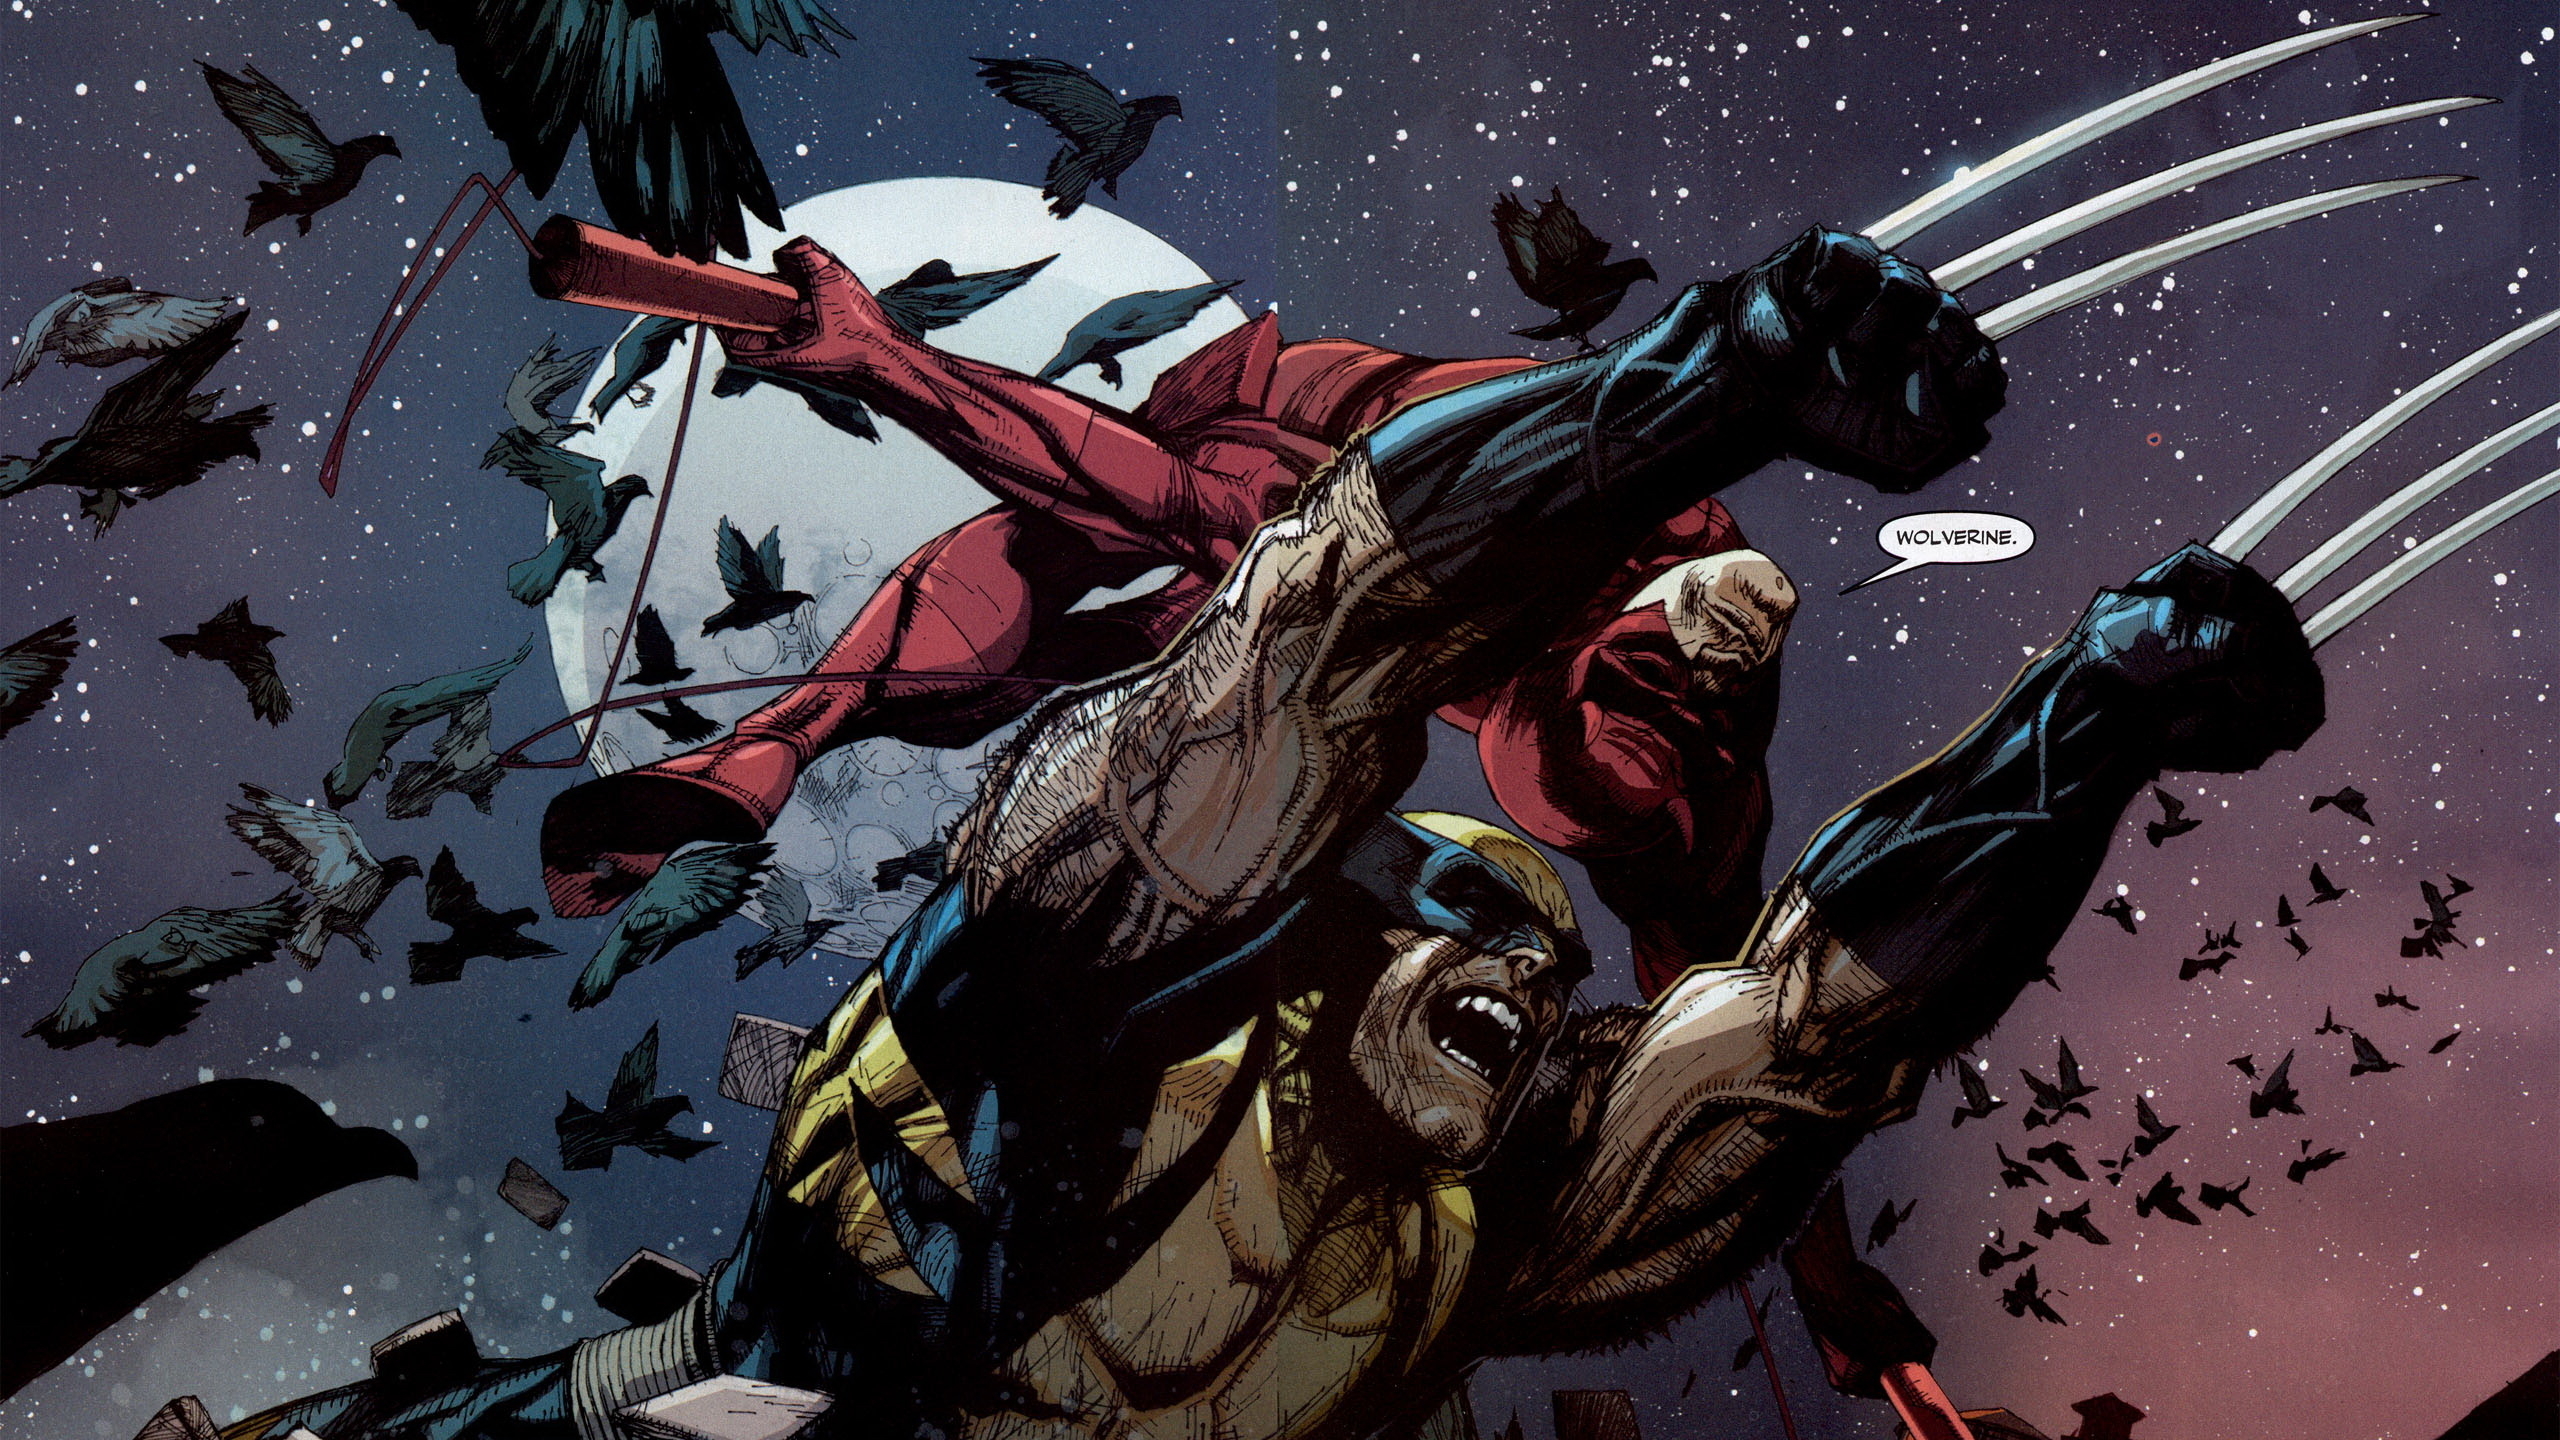 Daredevil and Wolverine in a Marvel Comics inspired desktop wallpaper.